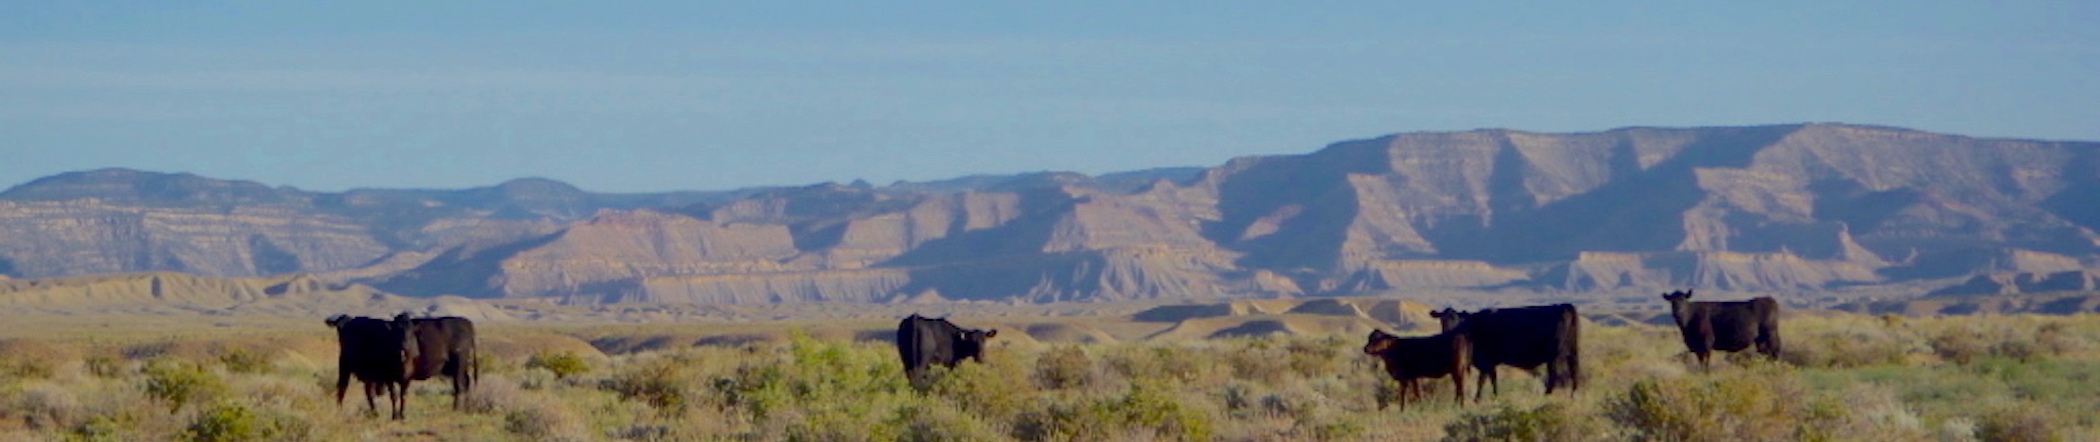 Cattle grazing in a desert shrubland ecosystems